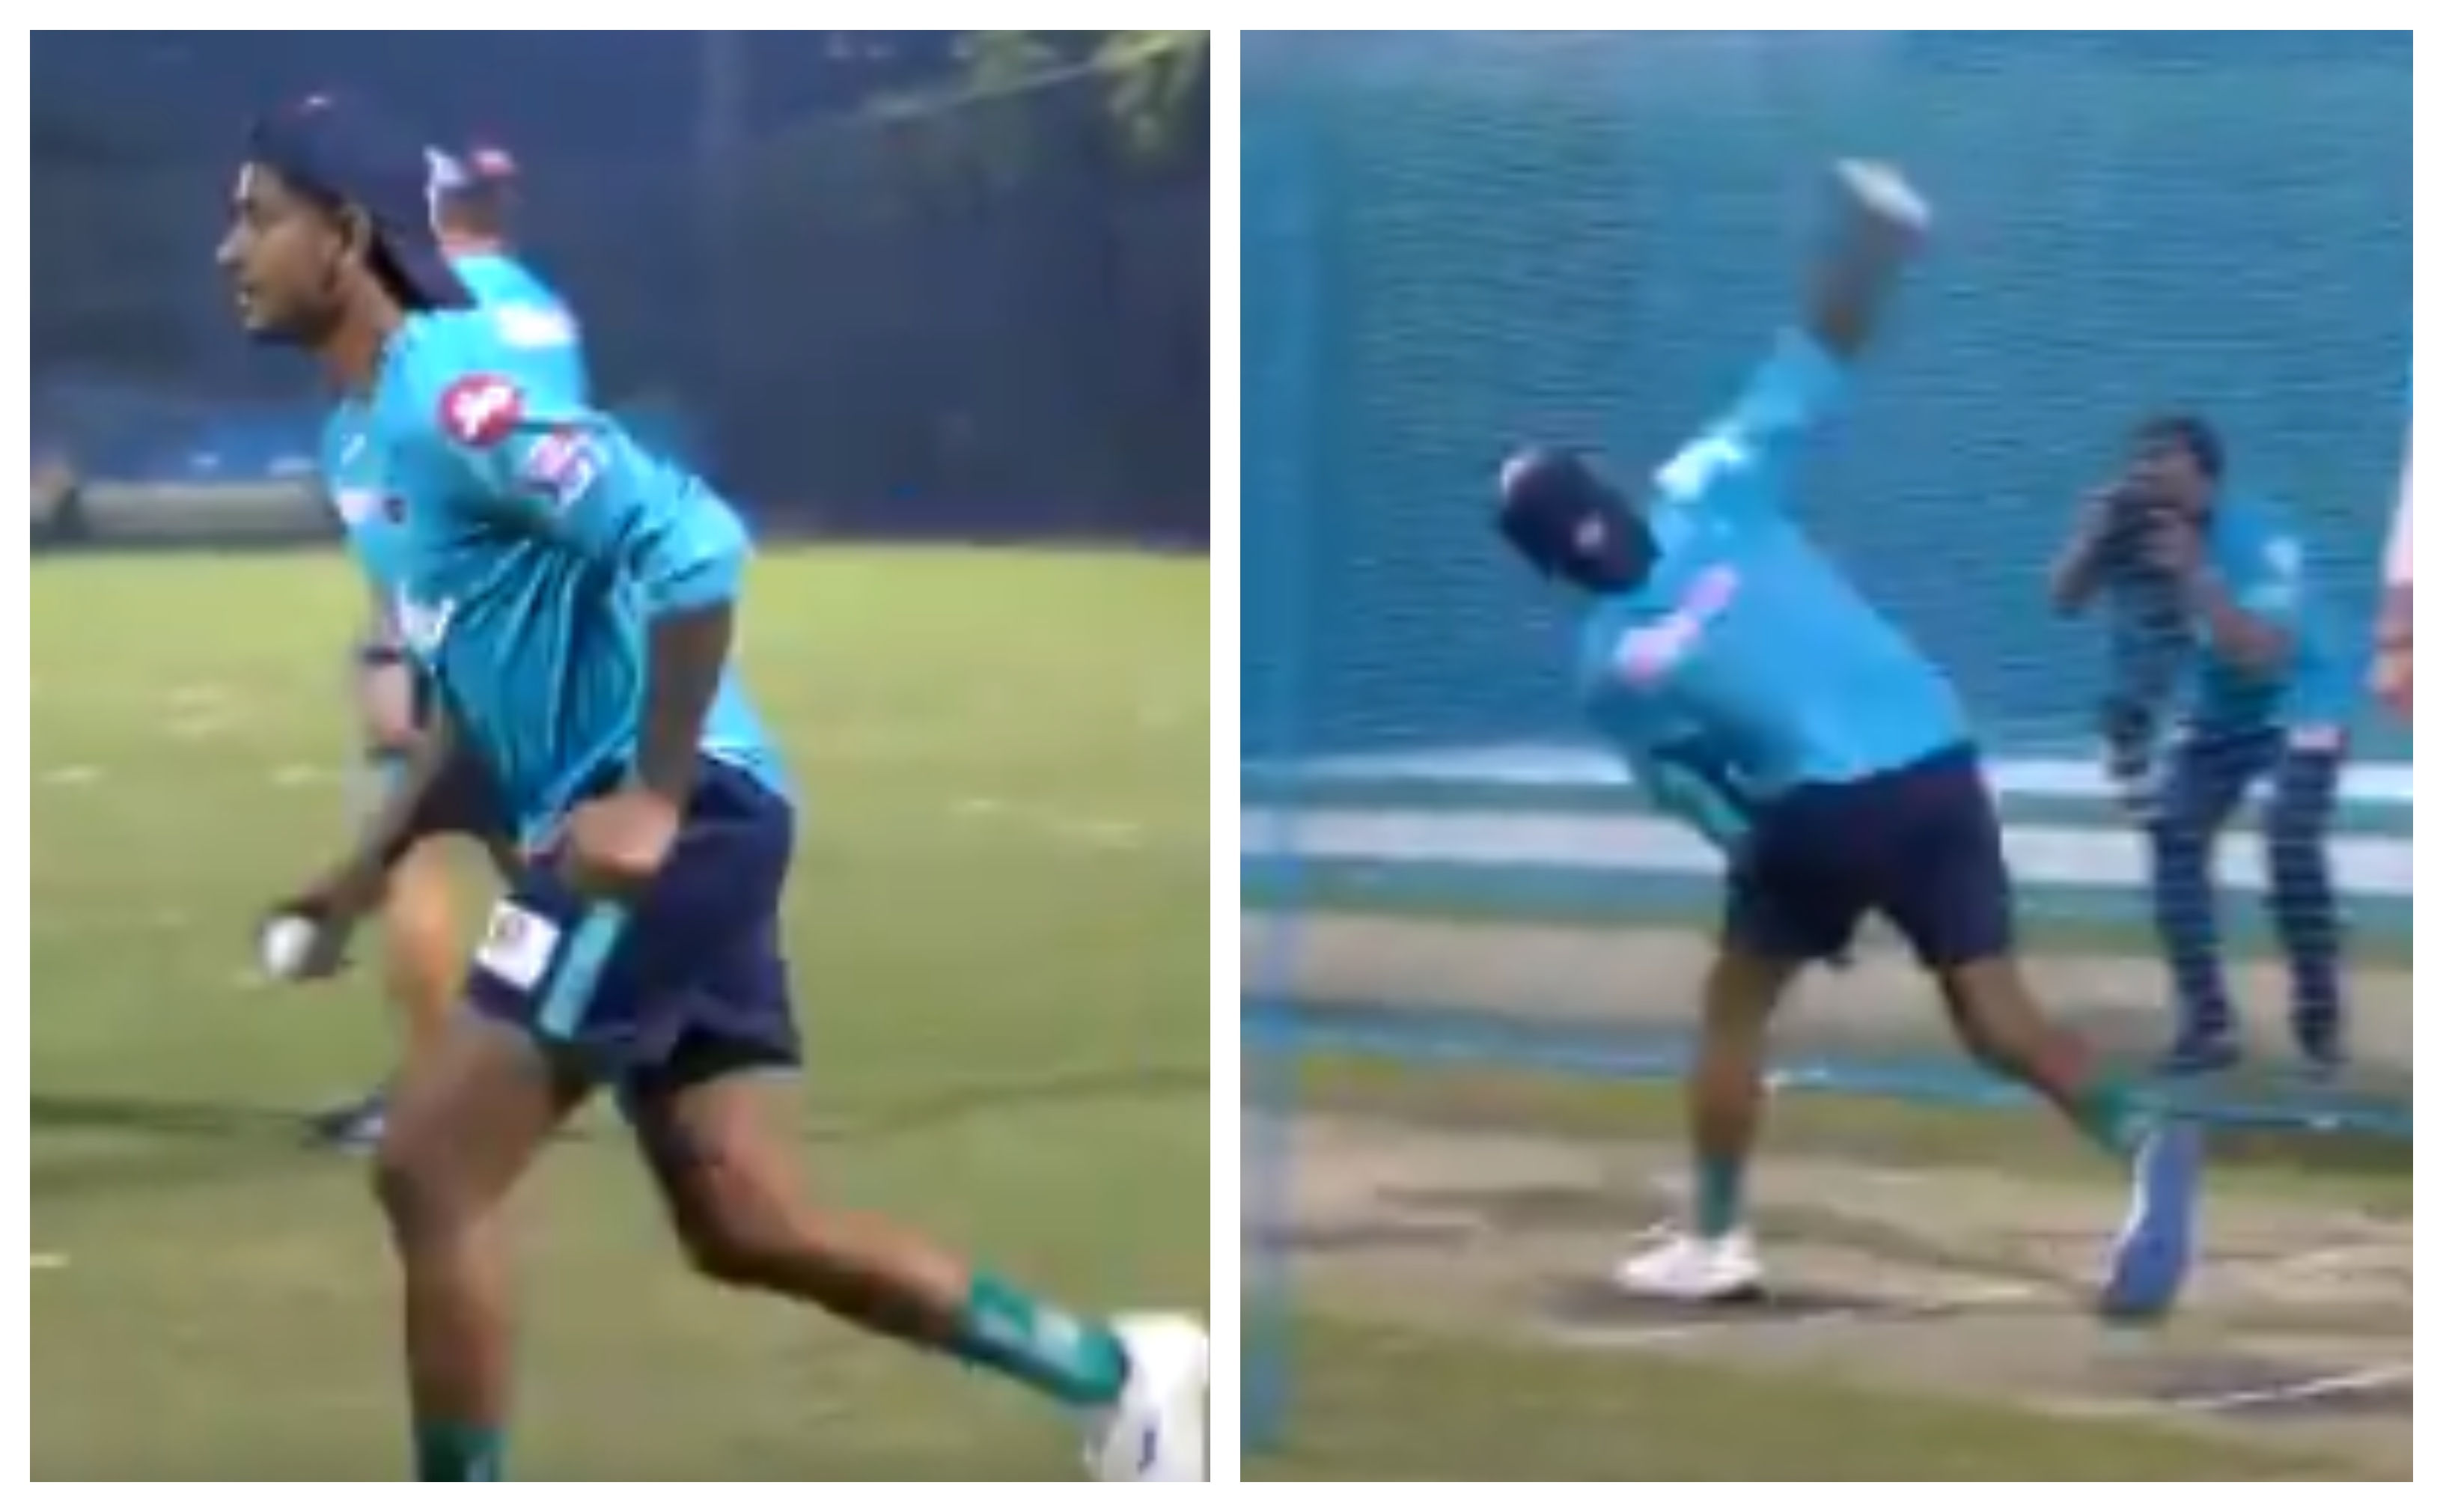 Sandeep Lamichhane displayed pace bowling skills in the nets | Screengrab